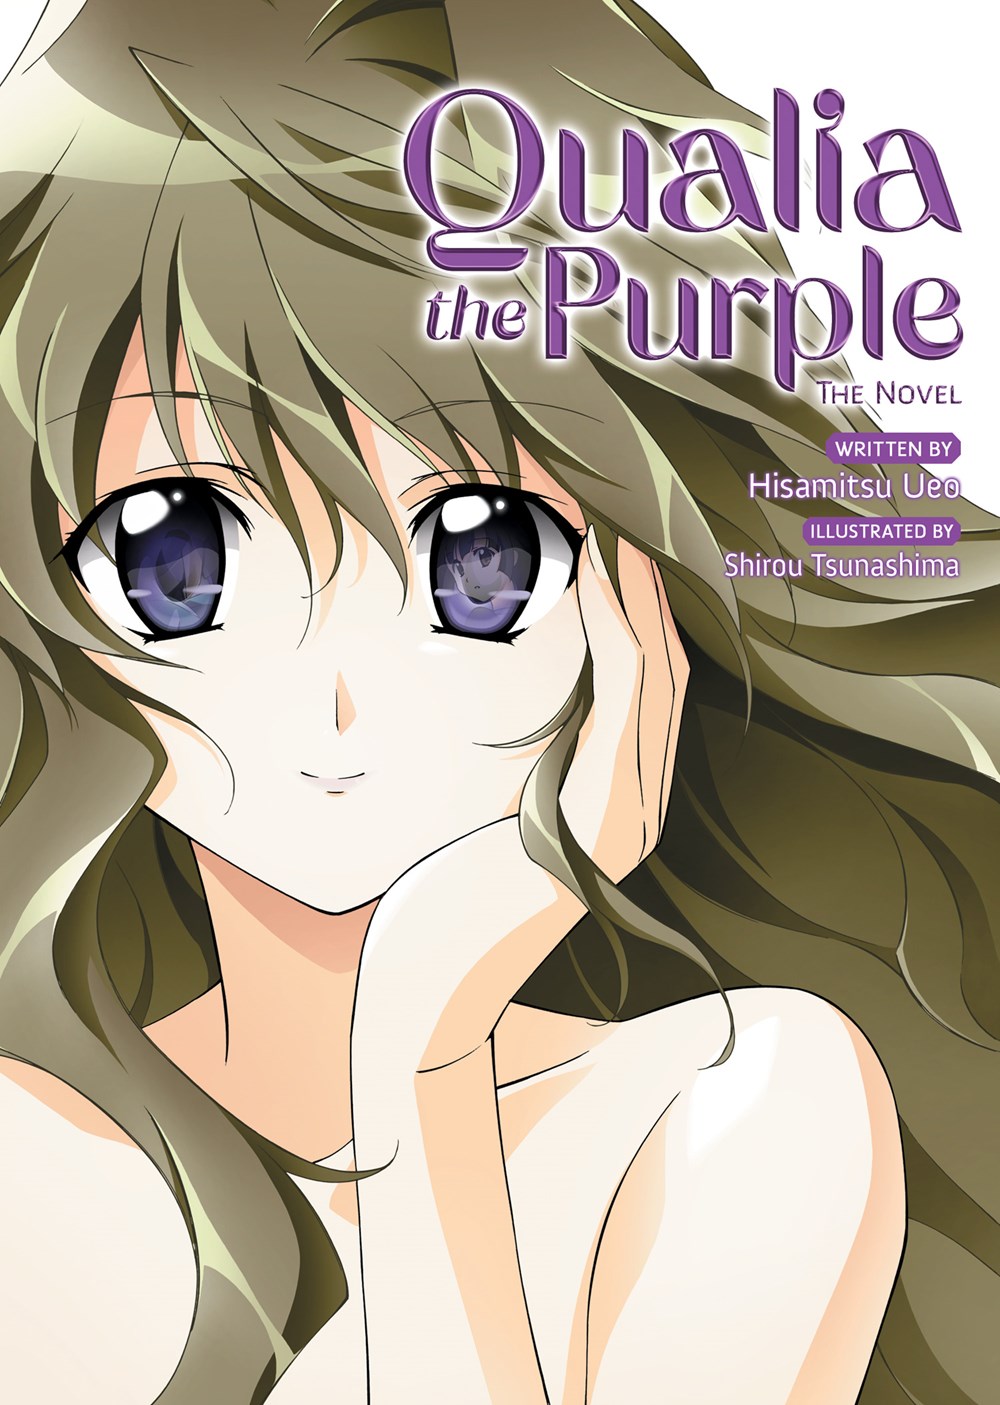 Qualia the Purple: The Novel Review